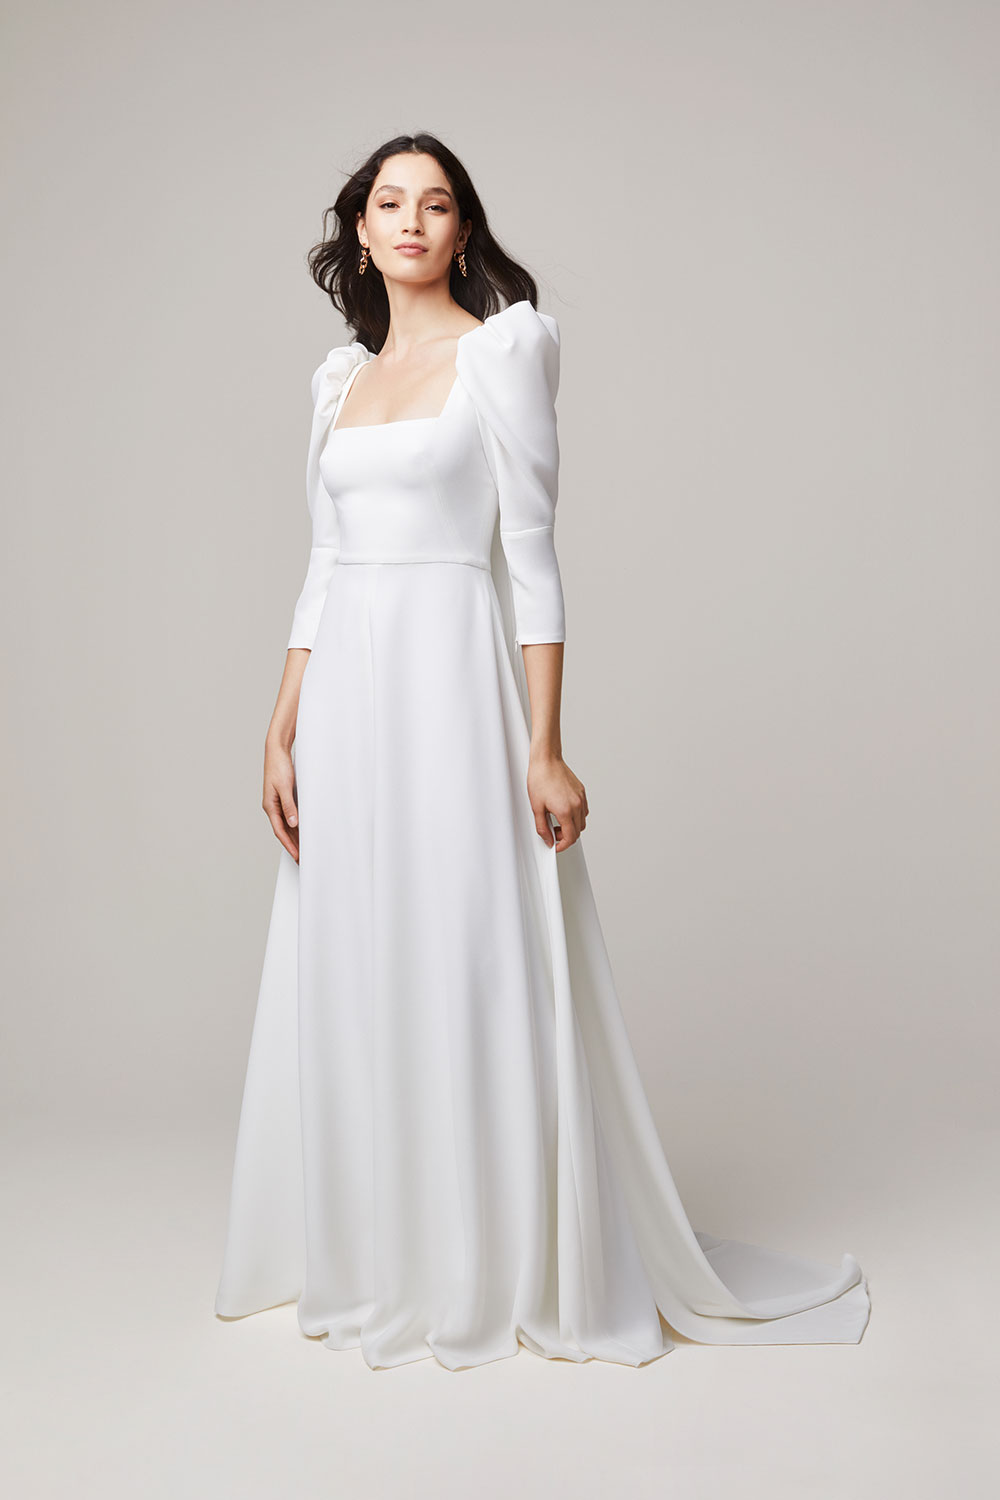 Jesus Peiro 2214 wedding dress or culottes